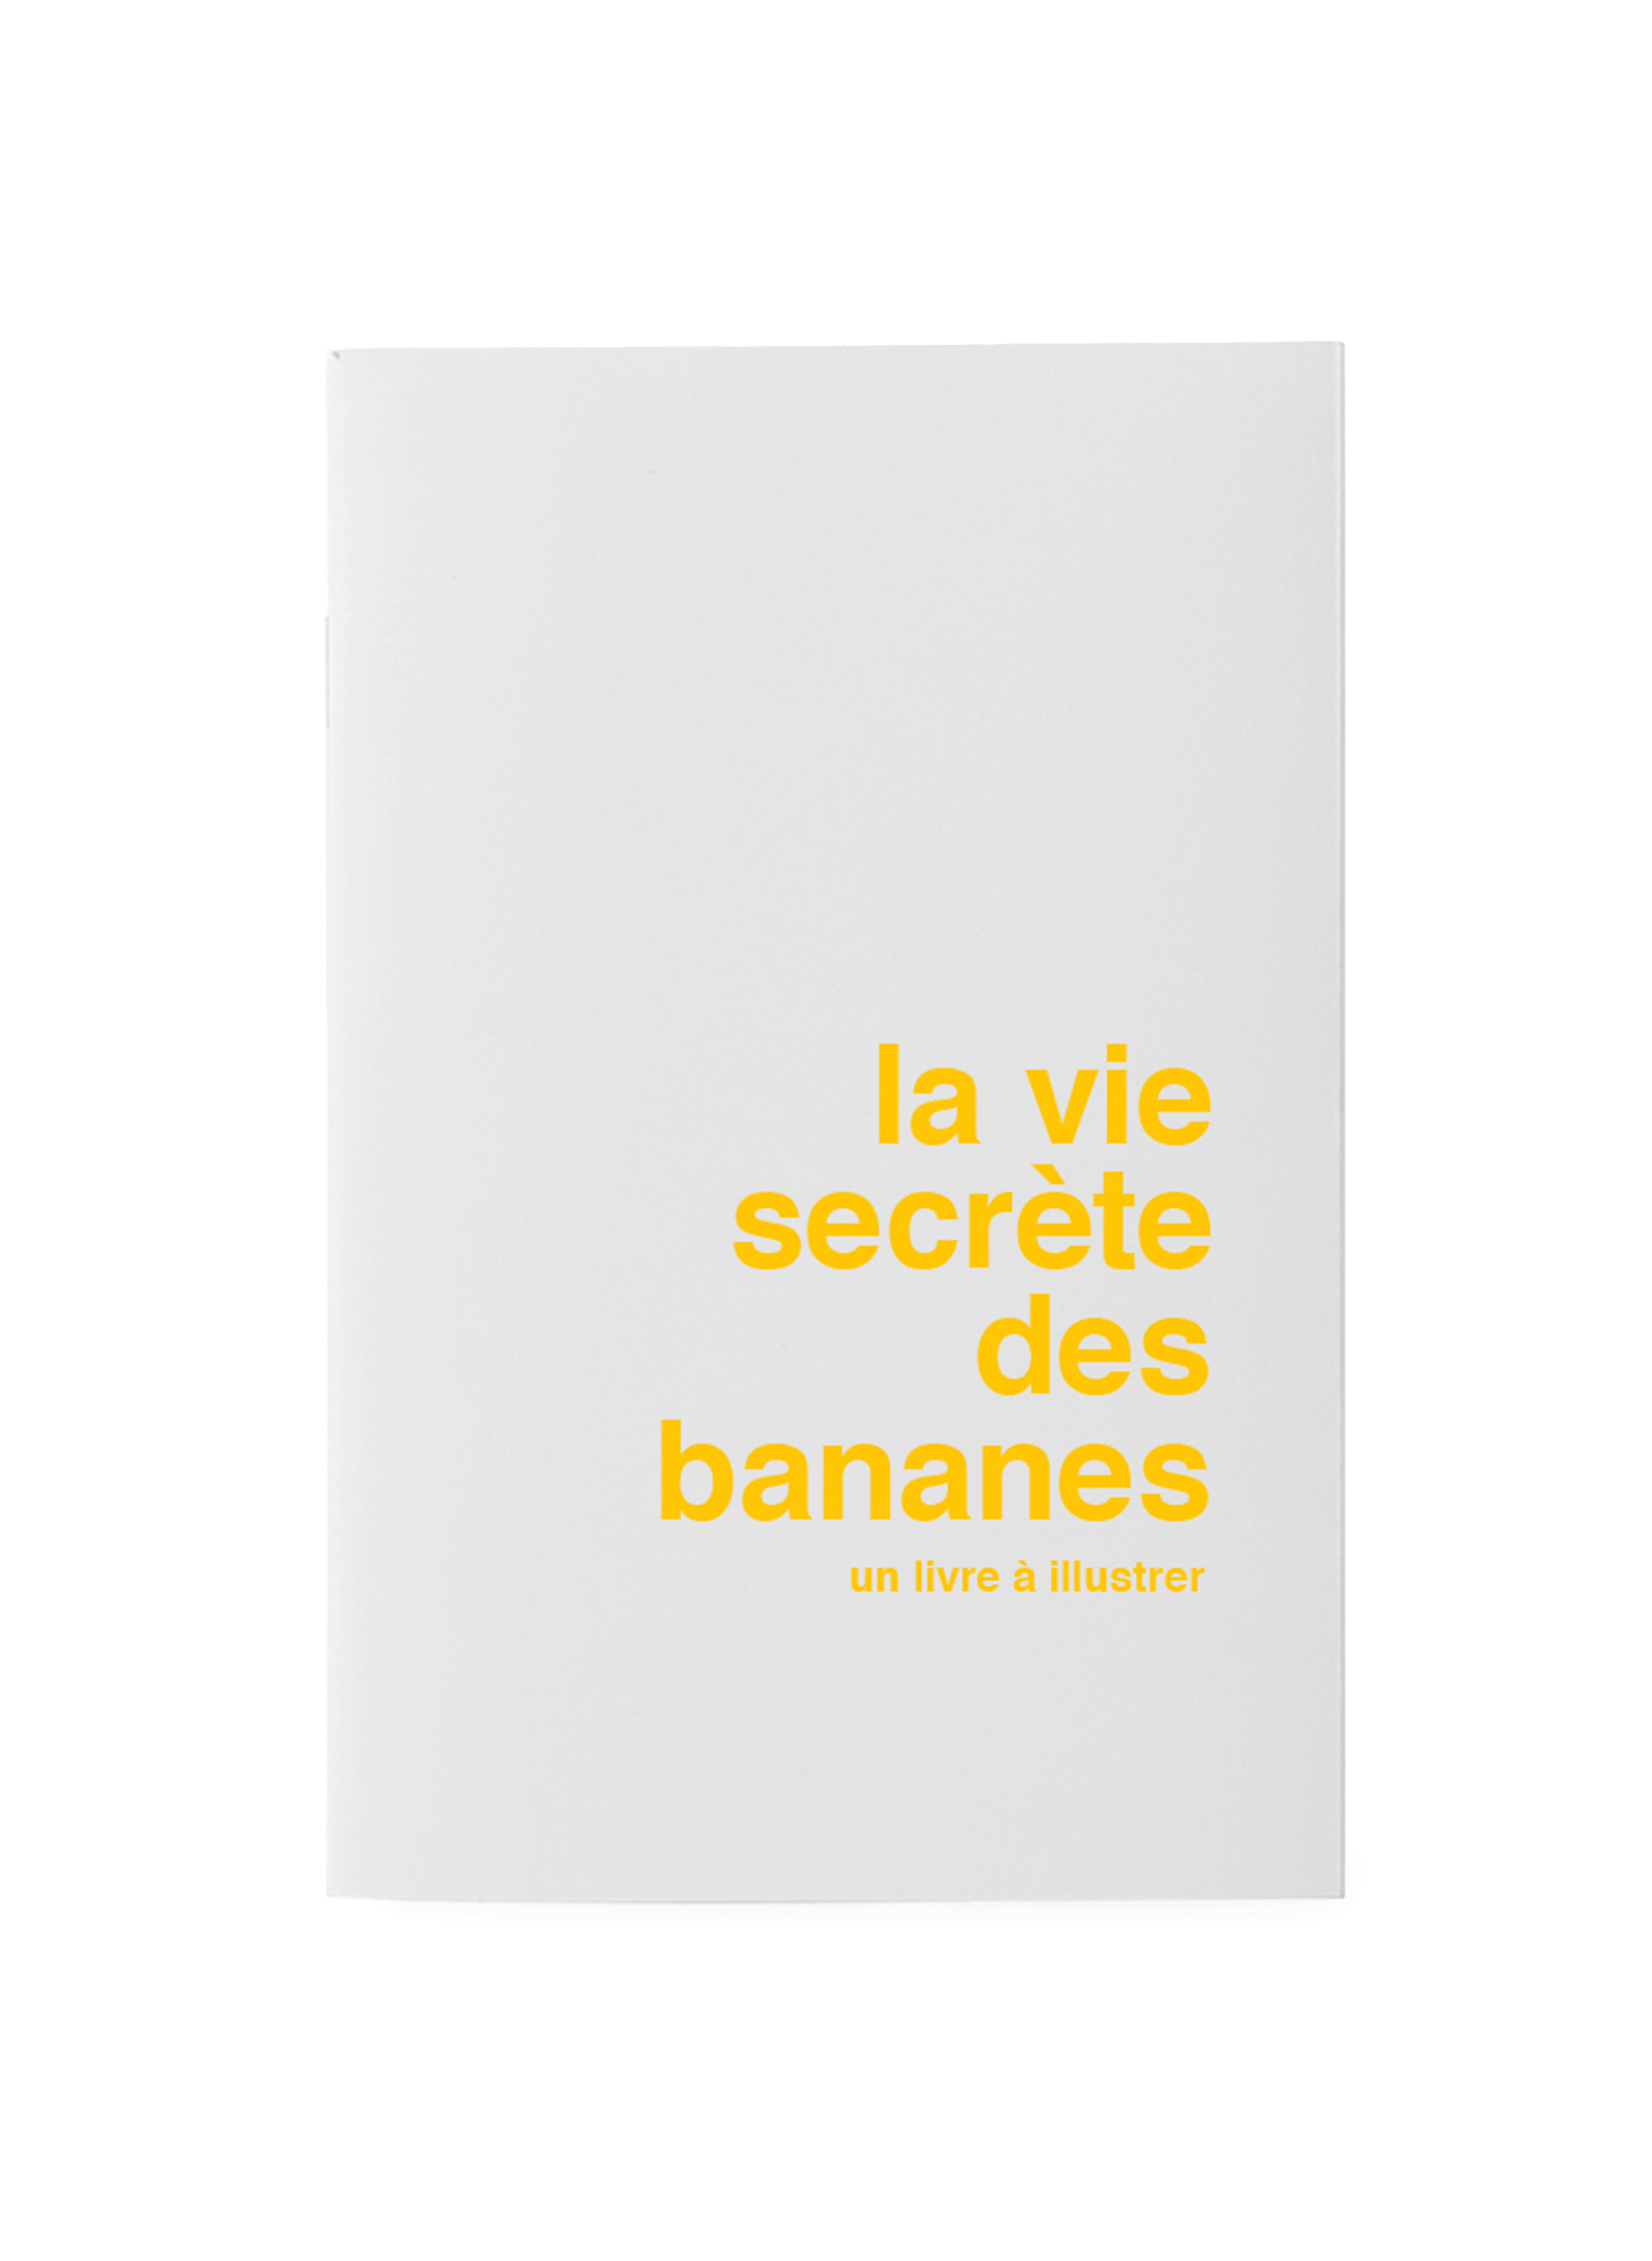 La vie secrète des bananes (the secret life of bananas) illustration book - French edition SUPEREDITIONS